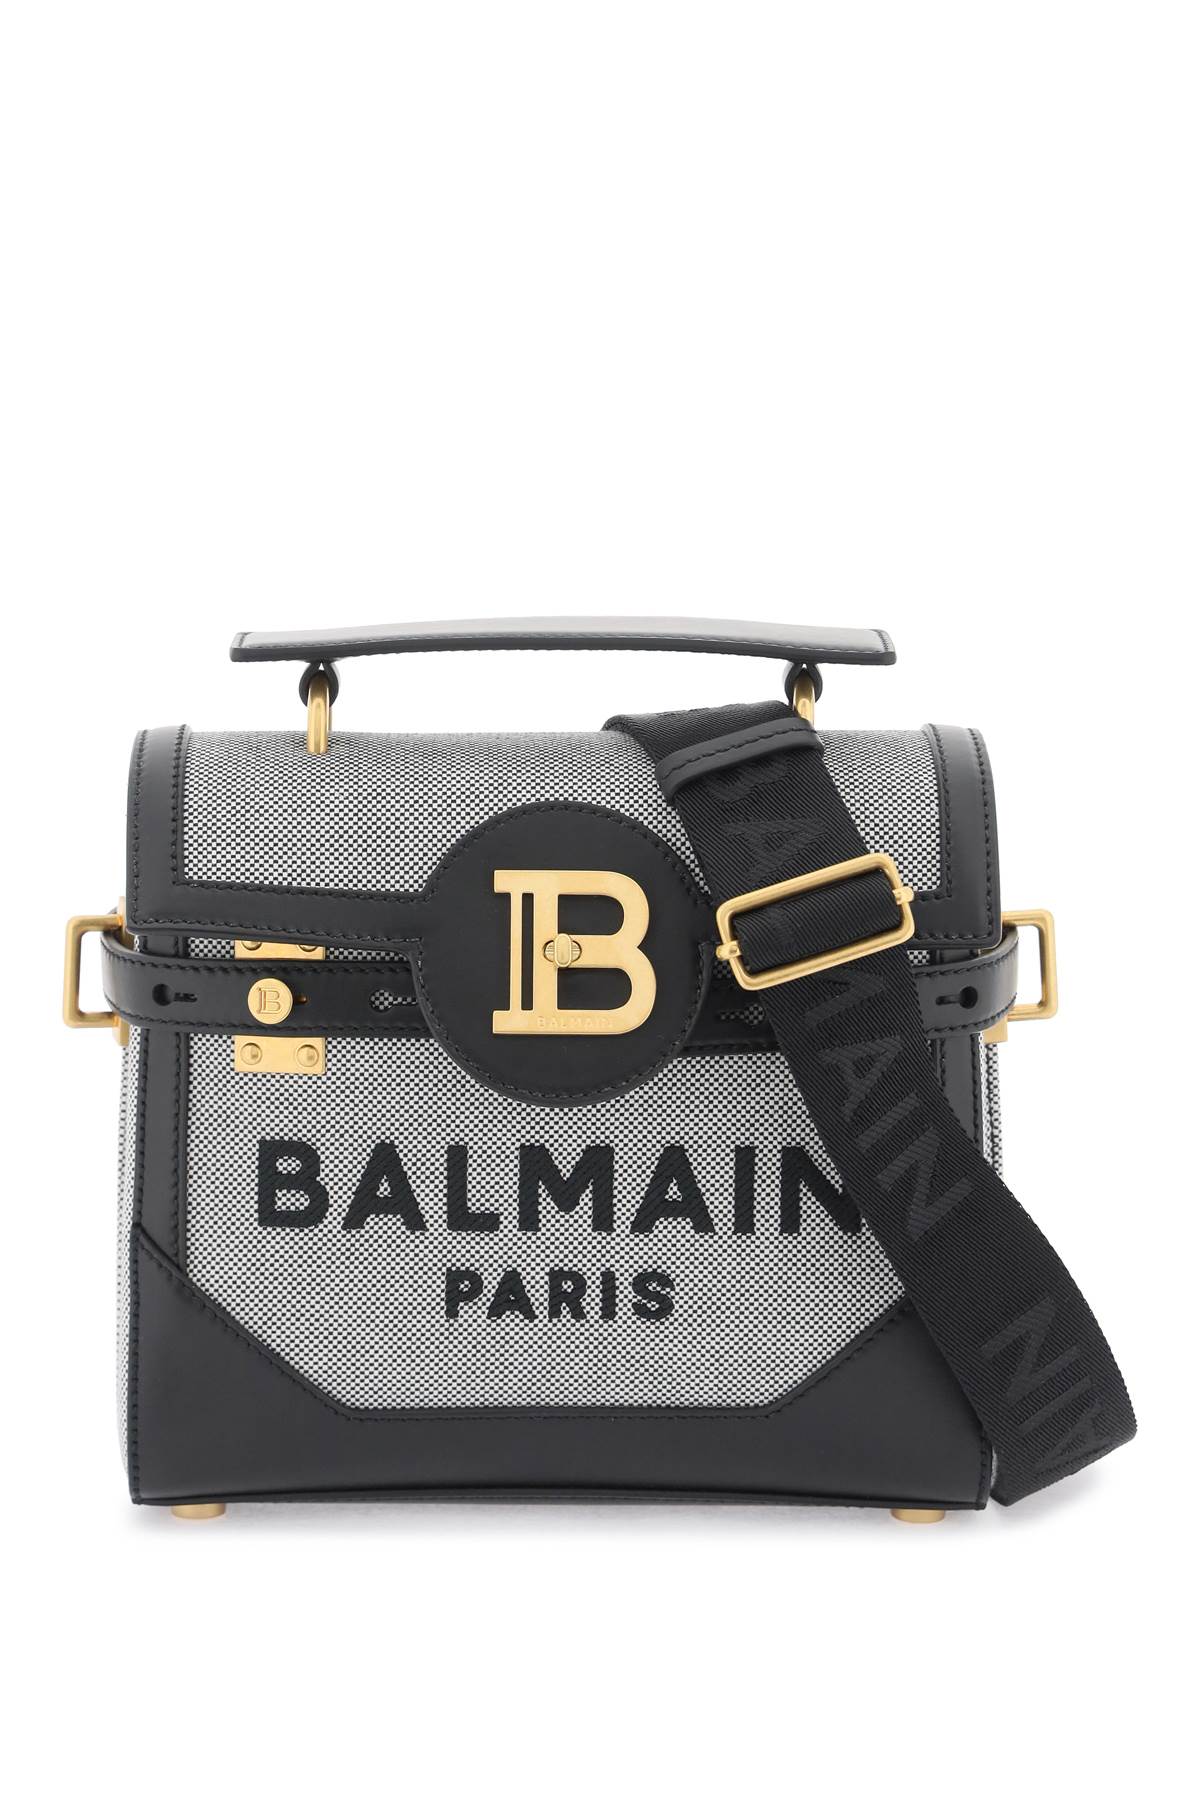 Balmain B-buzz 23 Handbag In Noir/blanc